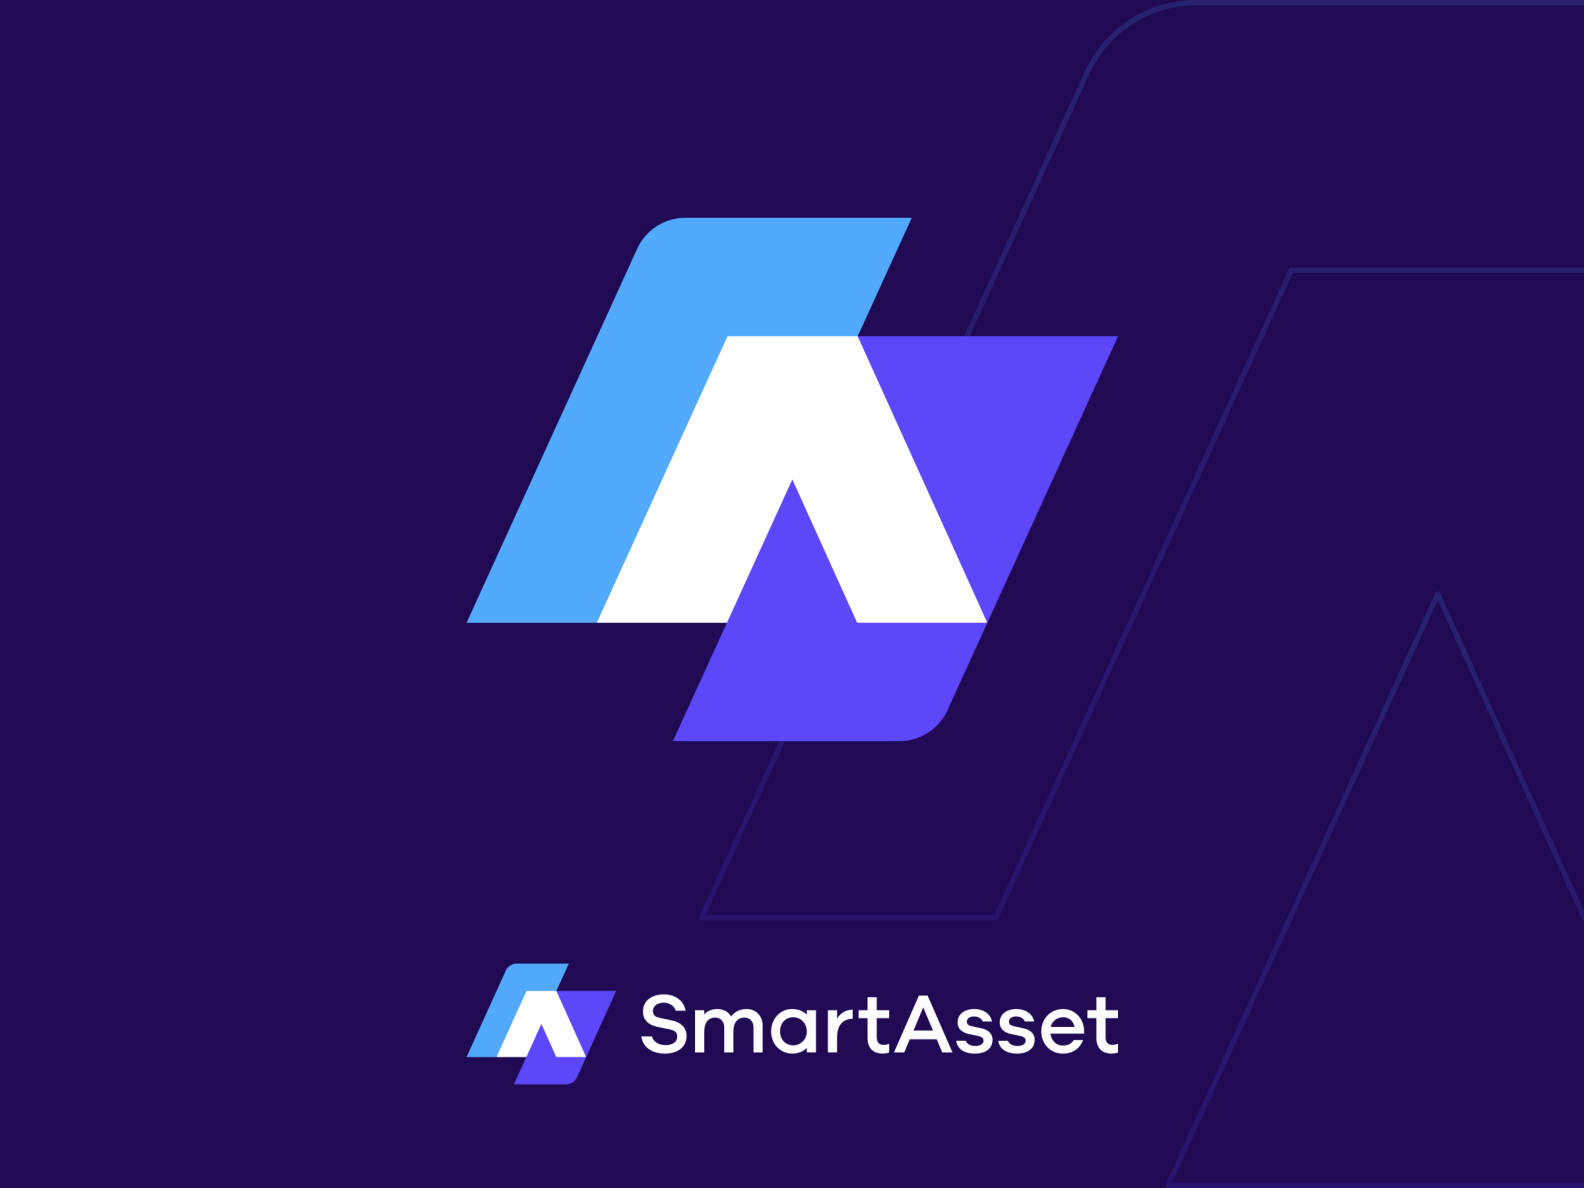 Smart Asset by asif iqbal | logo and branding expert on Dribbble